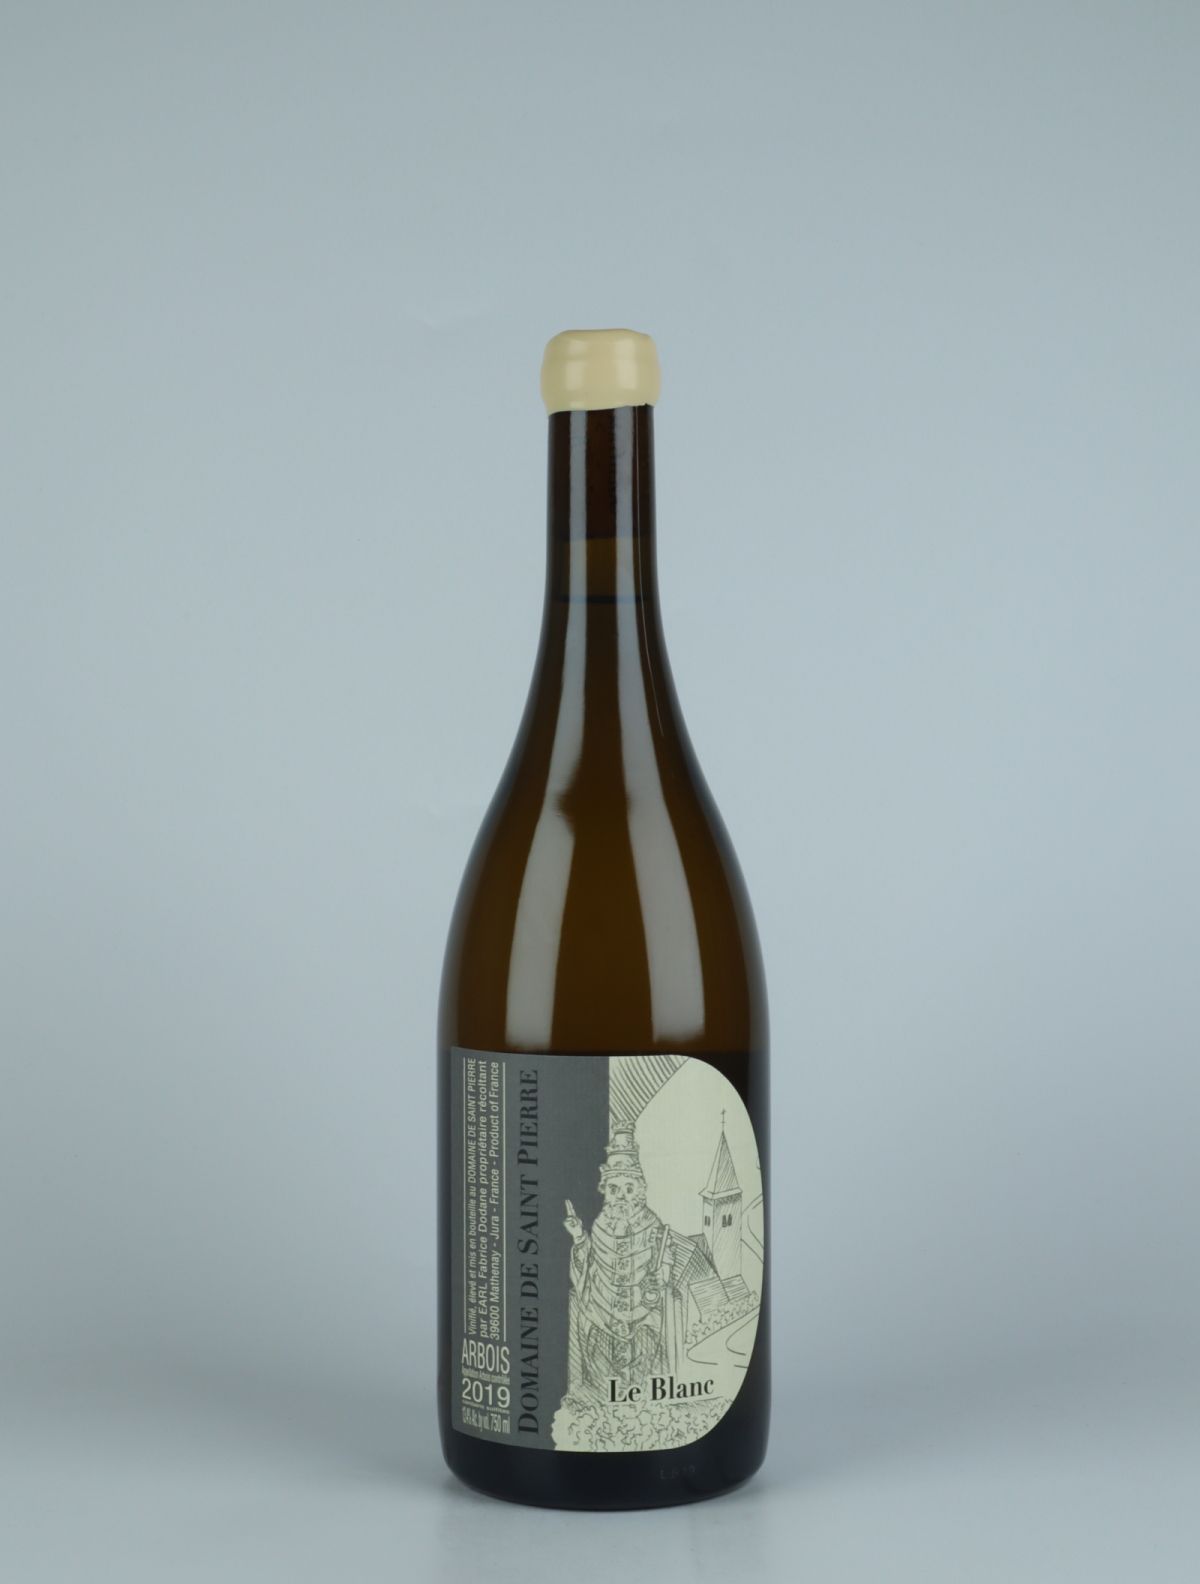 En flaske 2019 Arbois Blanc - Les Blanc Vin Hvidvin fra Domaine de Saint Pierre, Jura i Frankrig